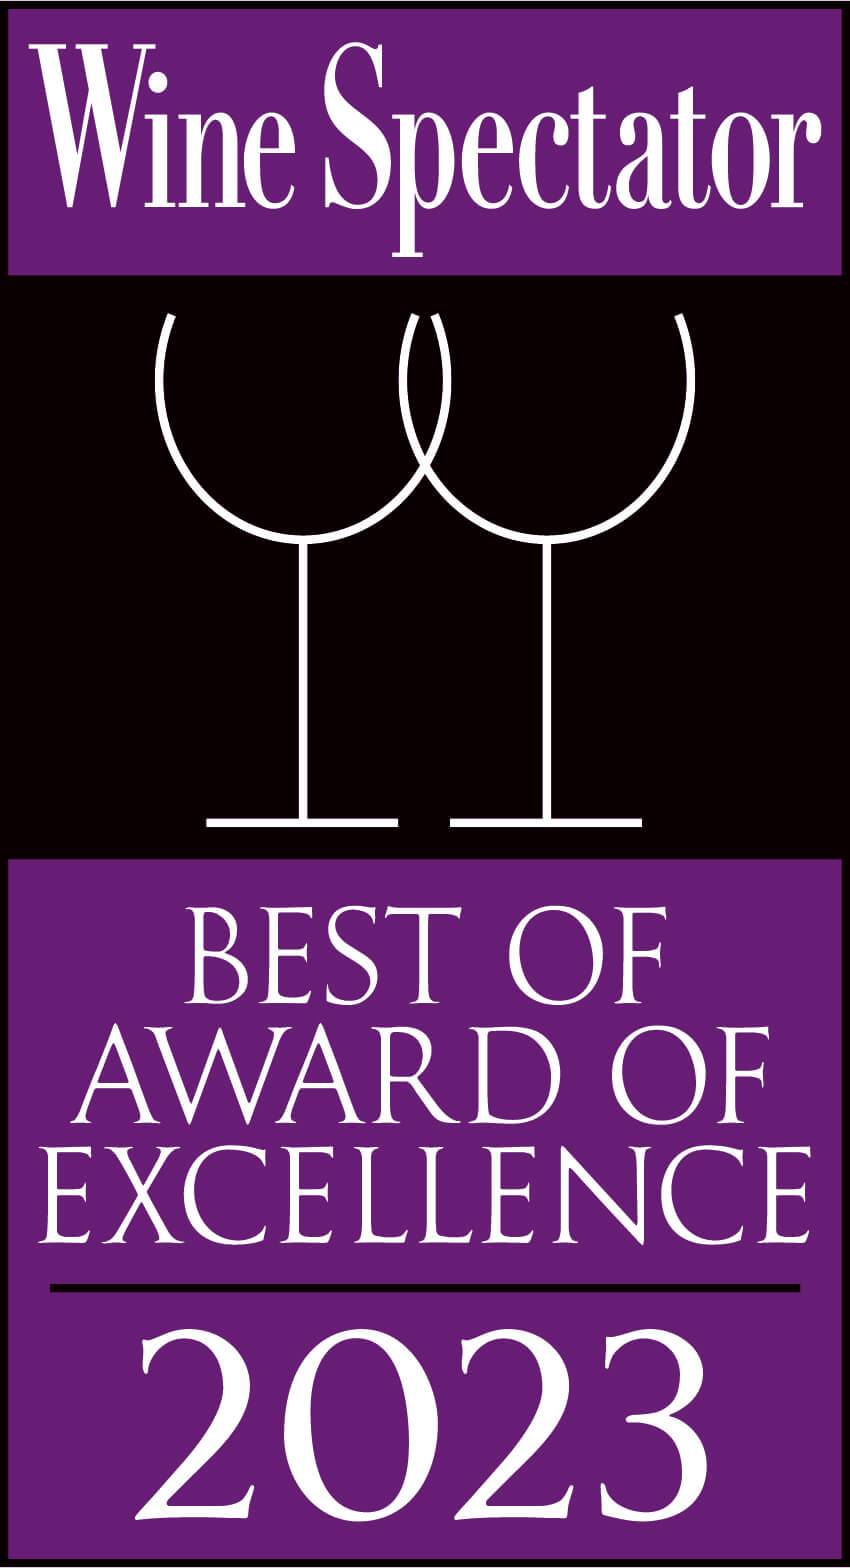 Wine Spectator Best of award of excellence badge